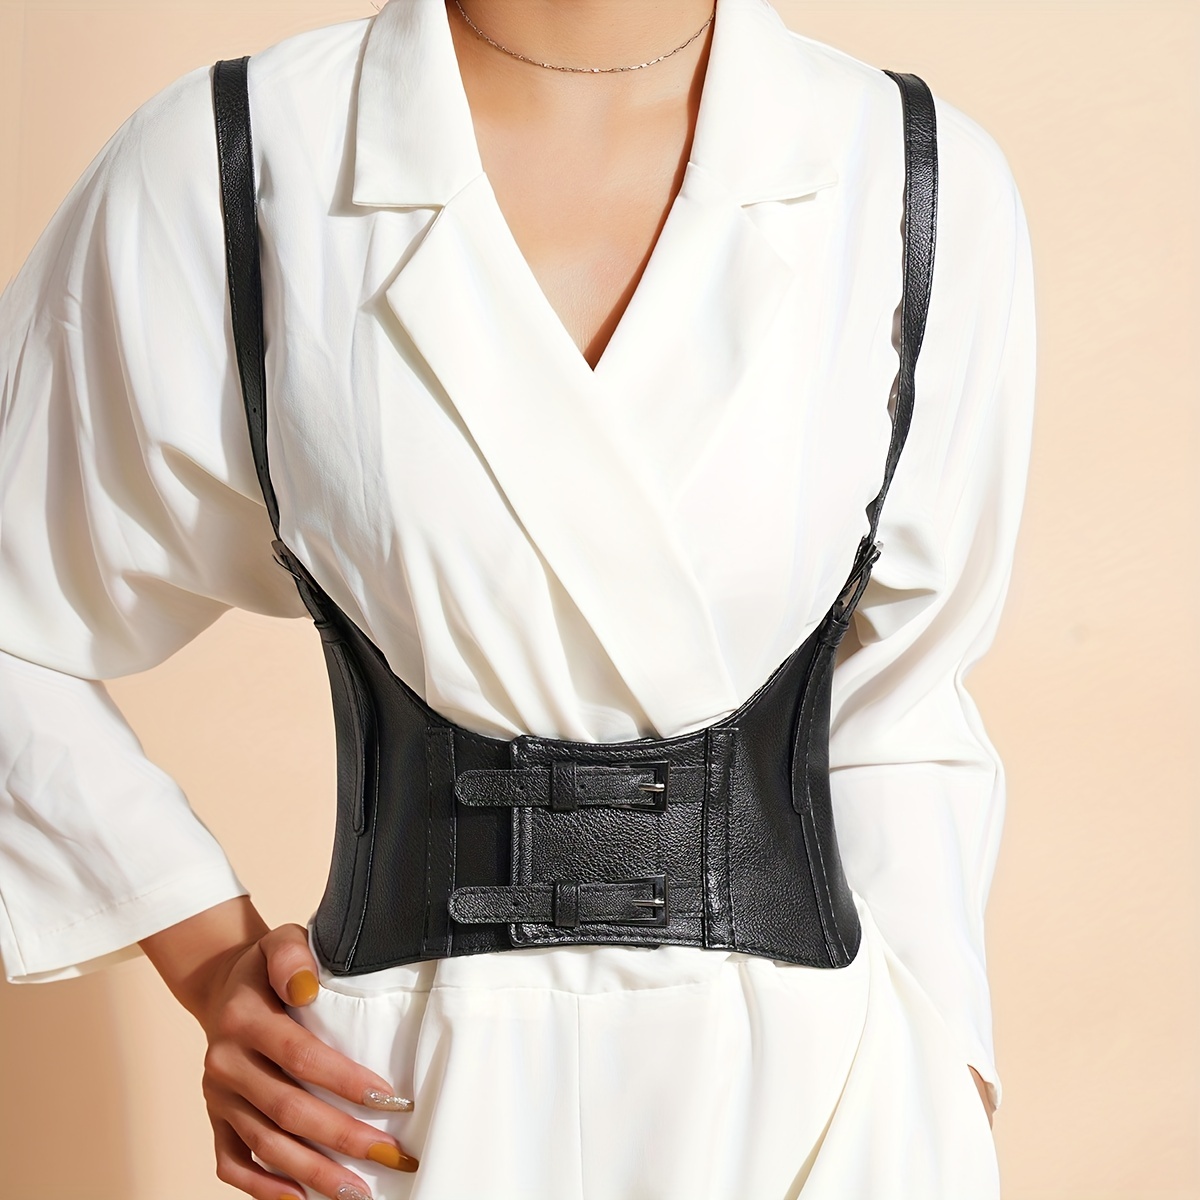 HOTWILL Underbust Corset Belts for Women Lace Up Tie Back Bustier Sheer Mesh  Cincher Waist Belt White at  Women's Clothing store